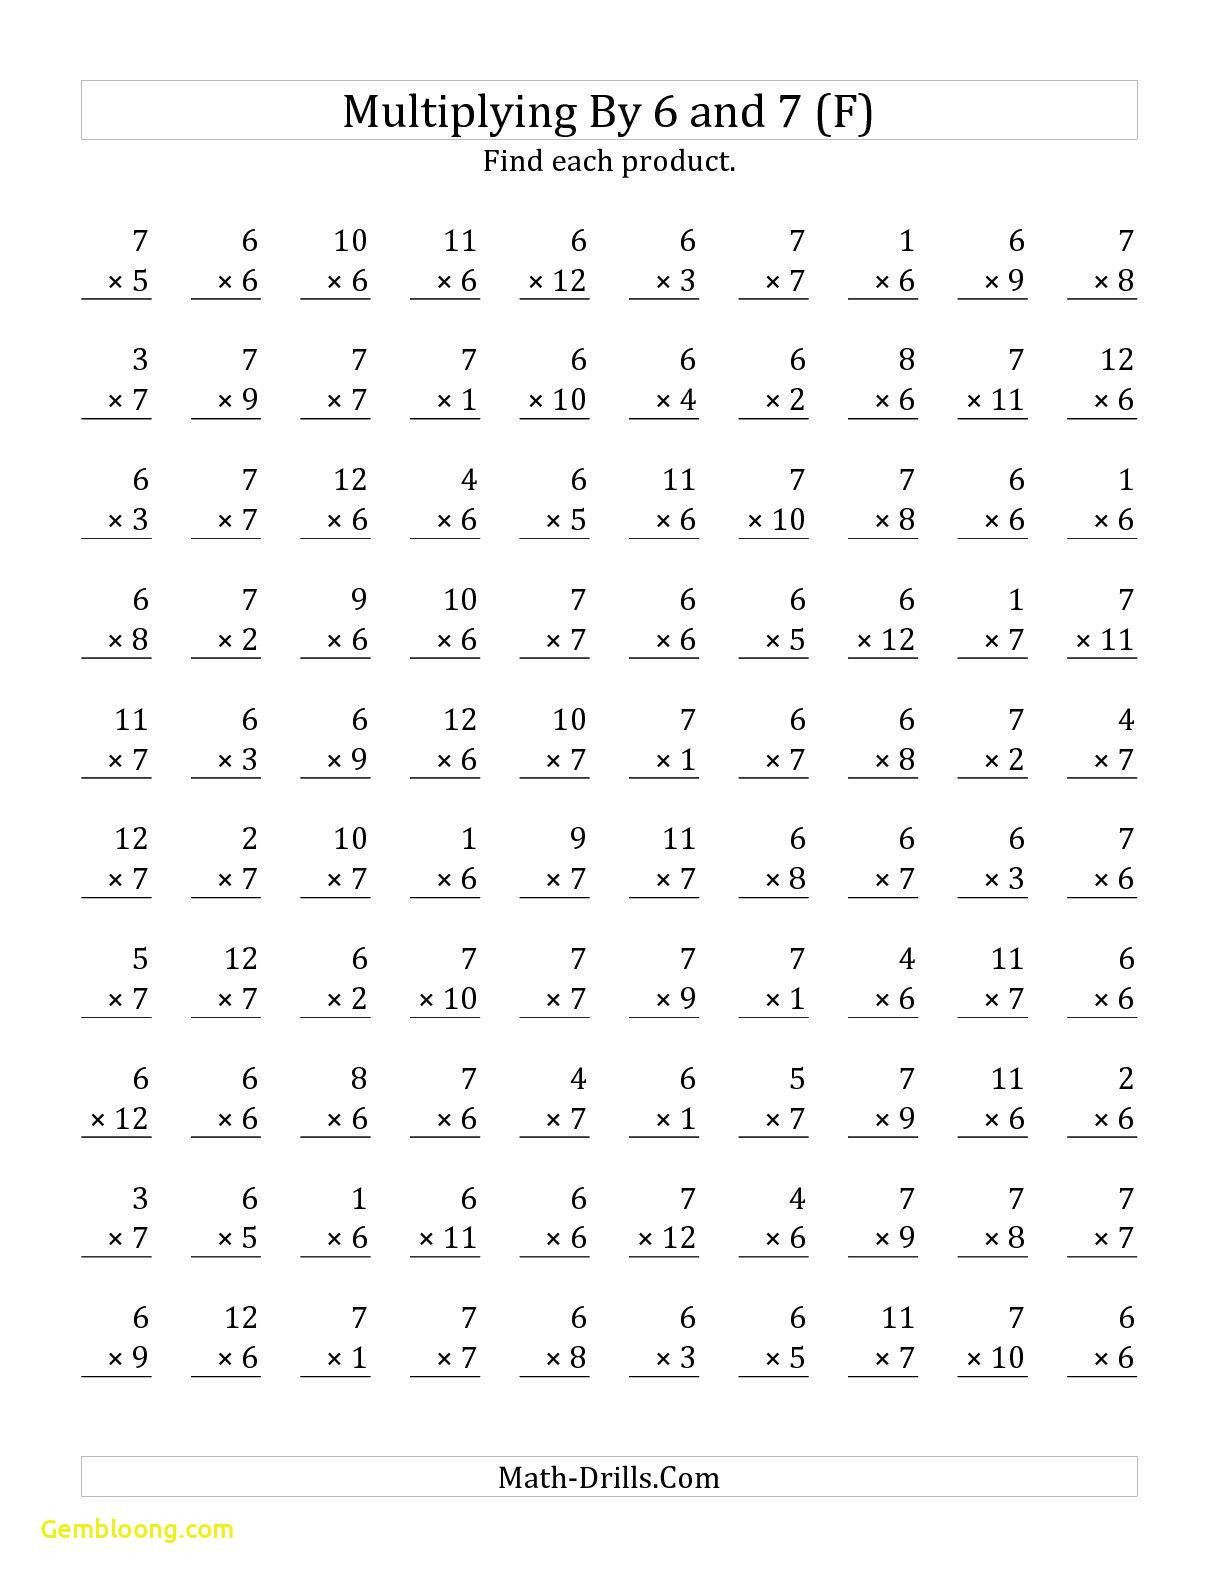  Multiplication Chart Printable Super Teacher PrintableMultiplication